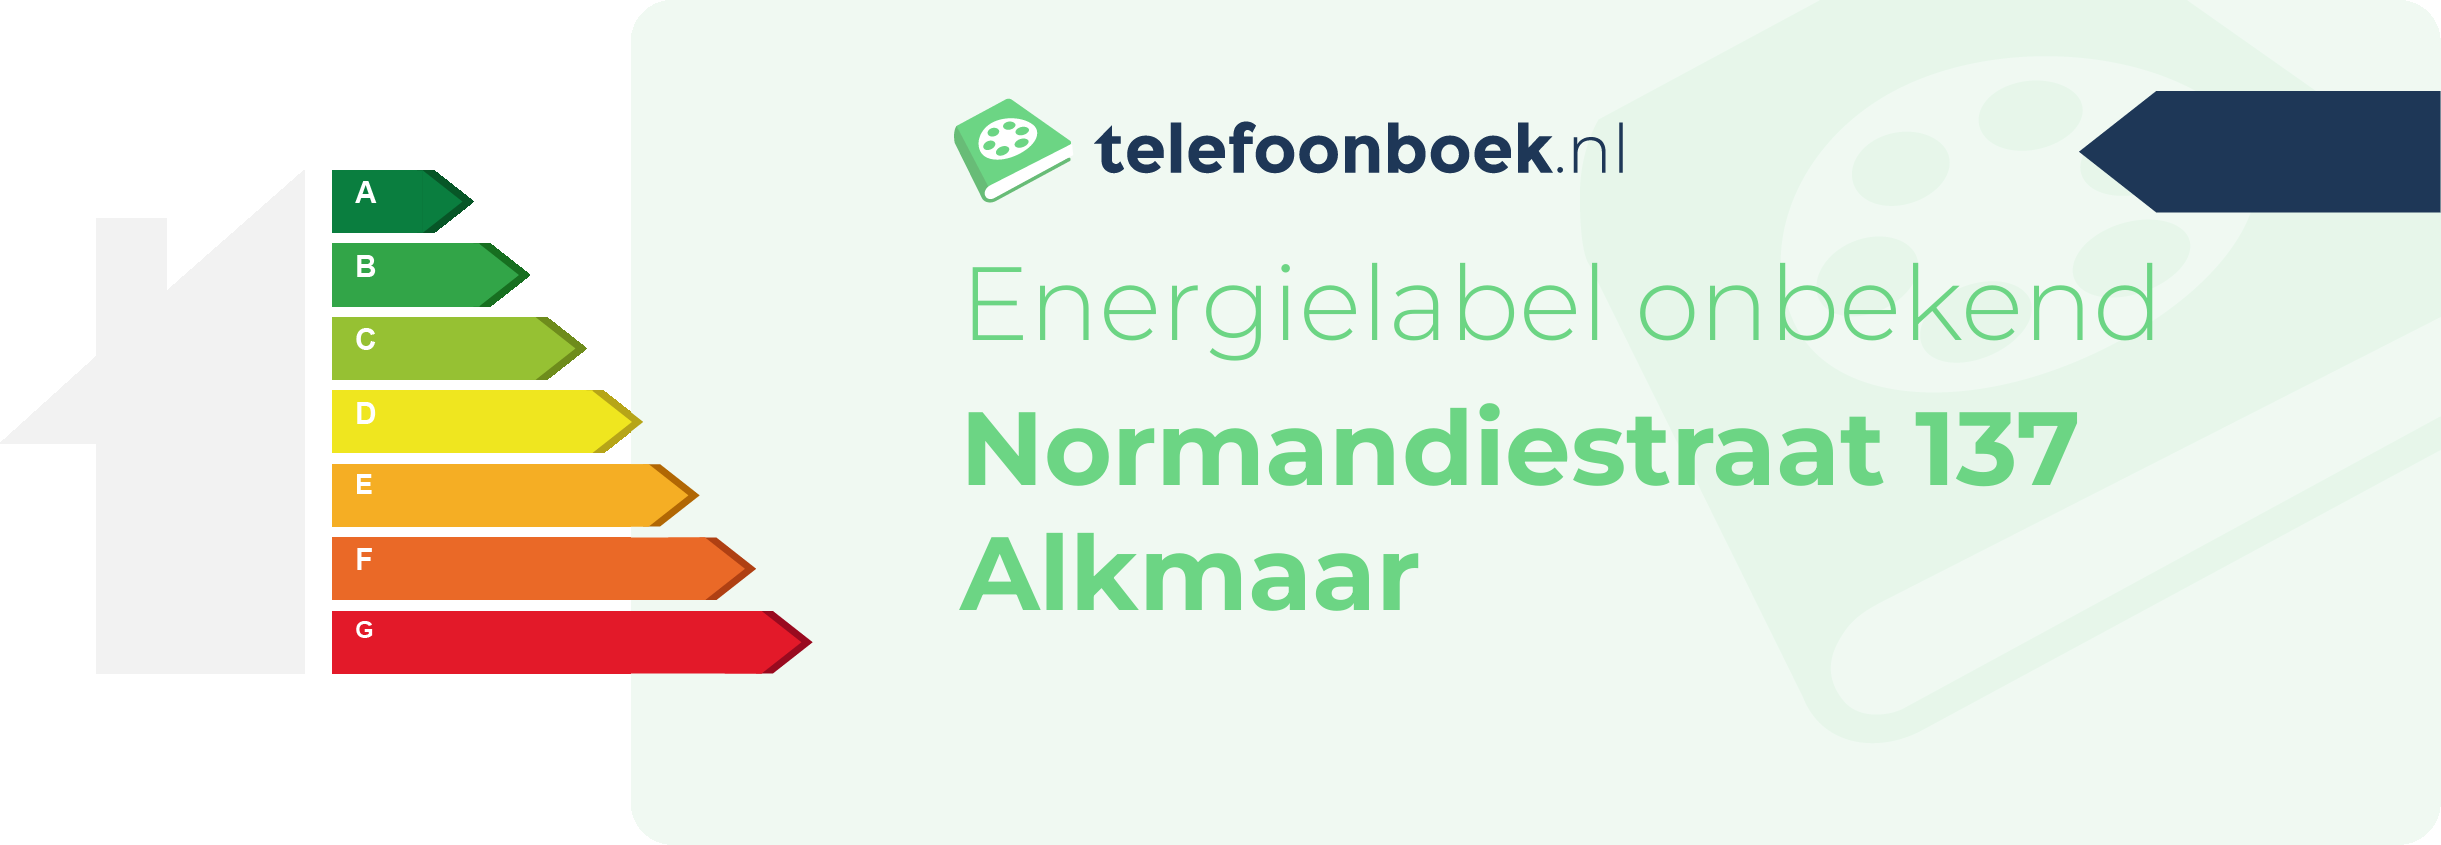 Energielabel Normandiestraat 137 Alkmaar